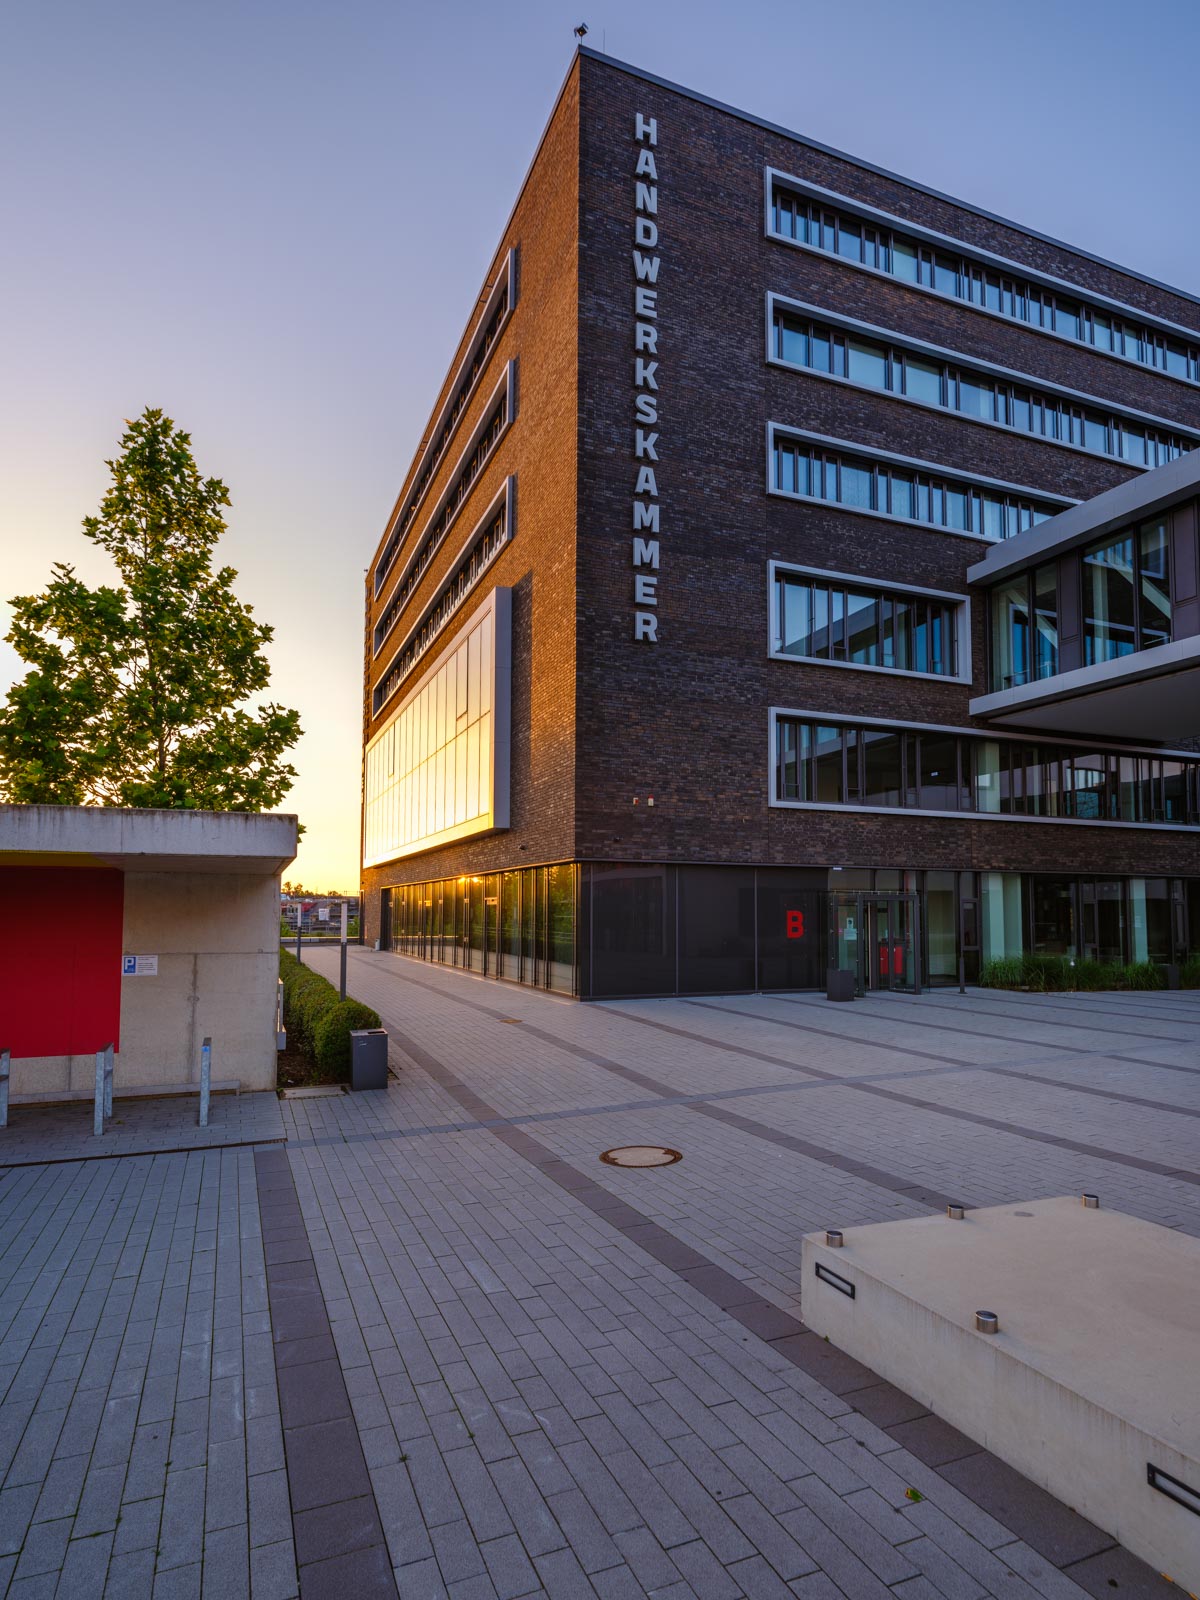 Building of the 'Campus Handwerk' at dusk in July 2021 (Bielefeld, Germany).